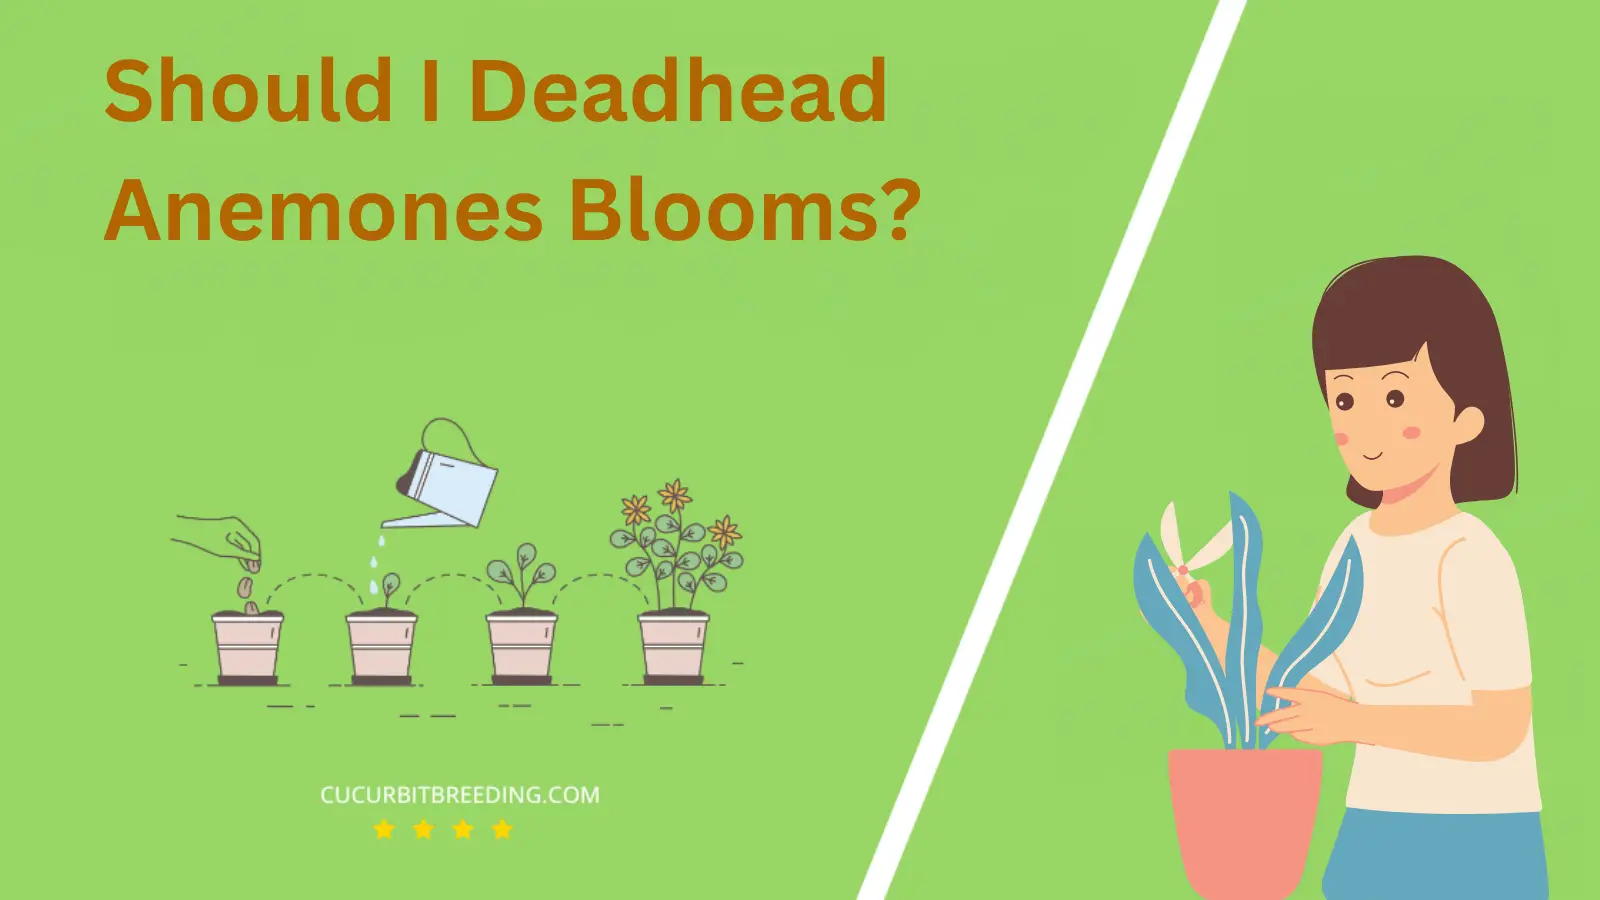 Should I Deadhead Anemones Blooms?